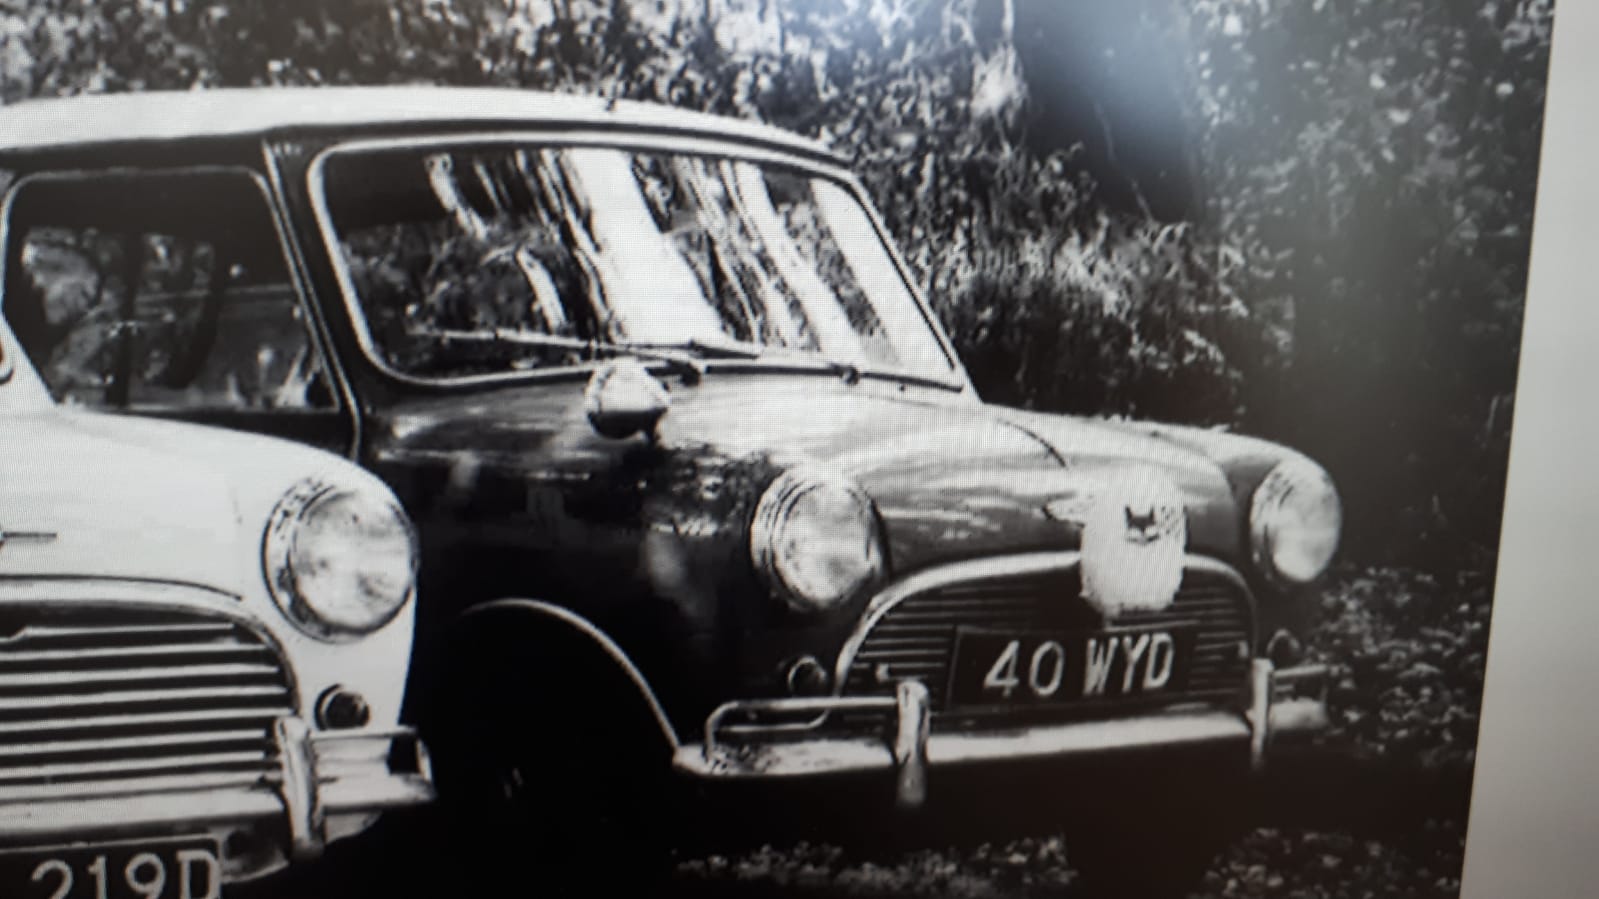 Anyone help find an Austin Mini Cooper Reg 40 WYD ???? - Page 1 - Classic Minis - PistonHeads